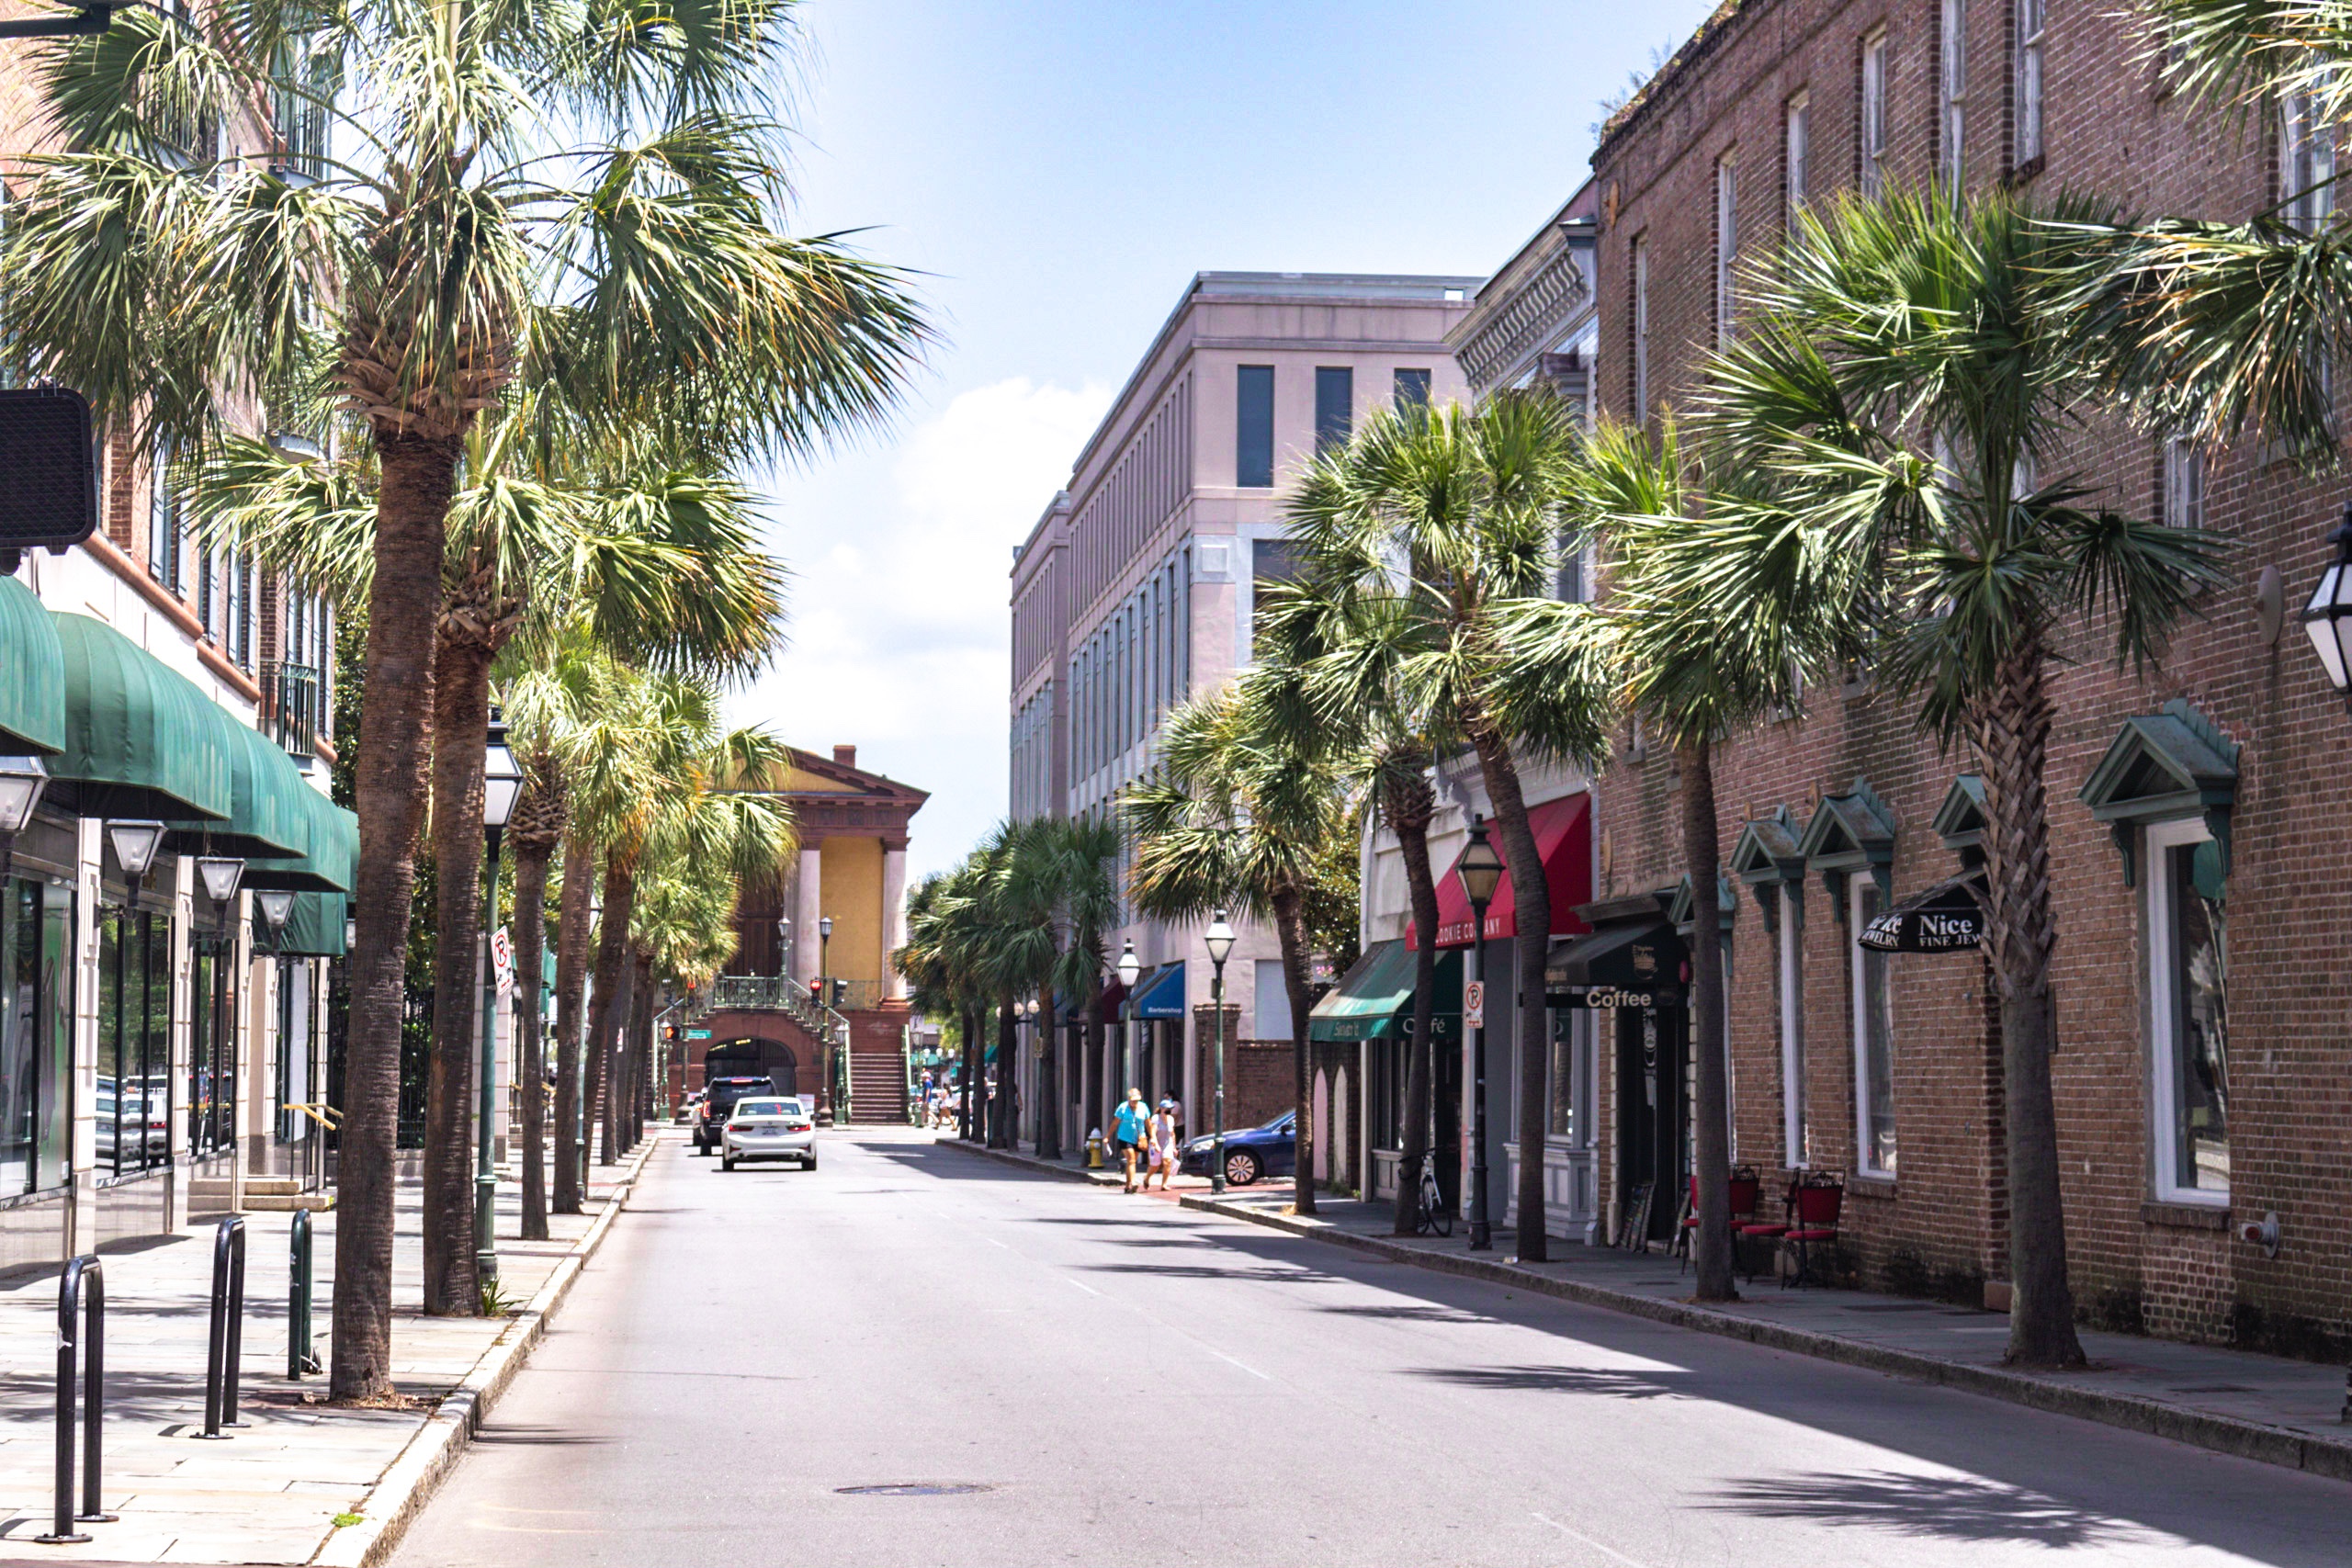 Scenic shot of the streets in Charleston South Carolina